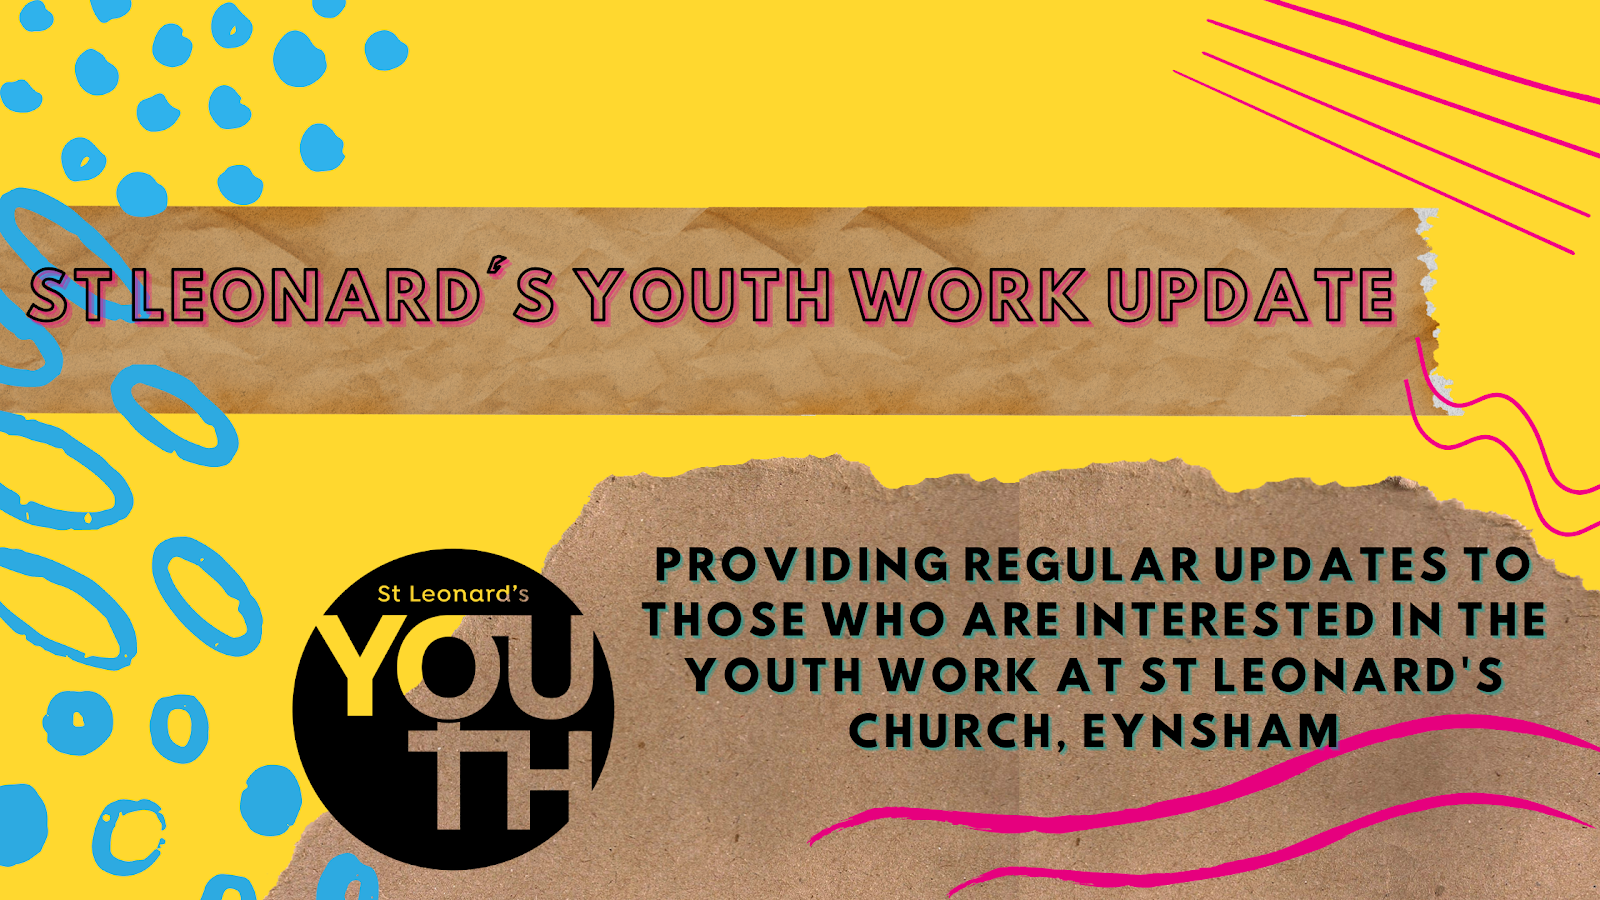 St. Leonard's Youth Work Update